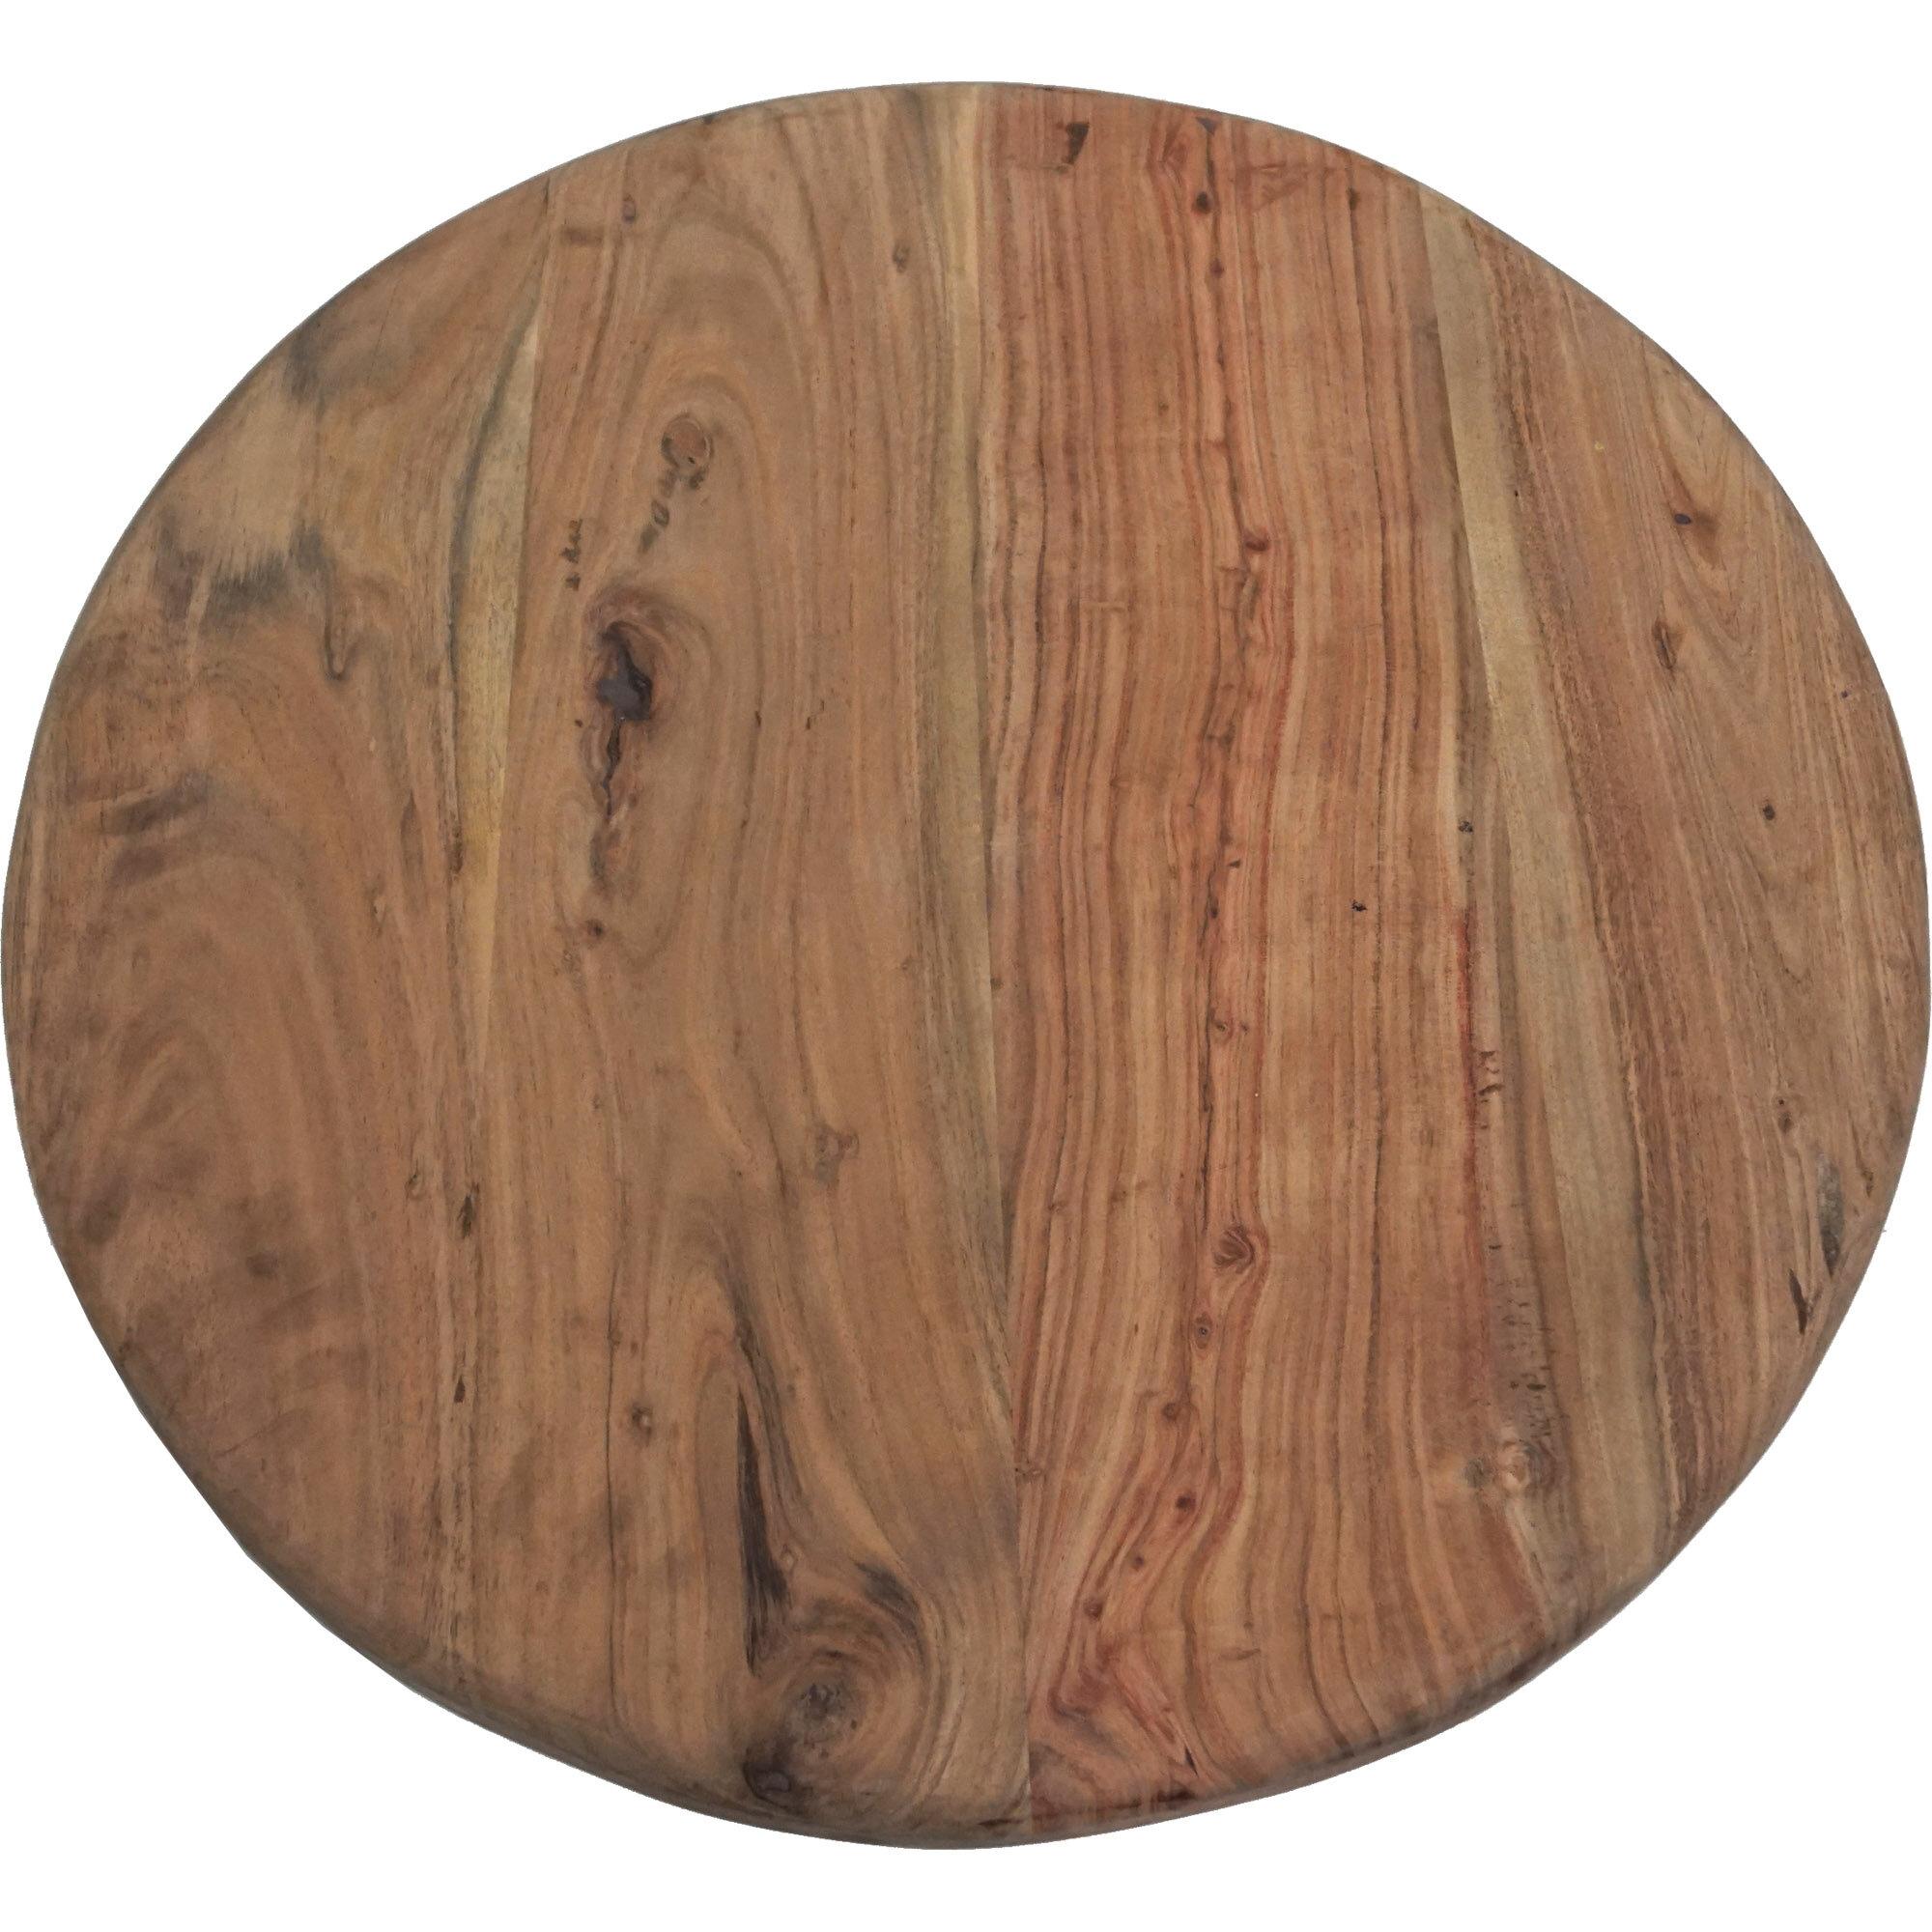  Sinan massiv bordplade i rustikt træ - Ø70 cm fra Trademark Living i Træ (Varenr: SG1921)